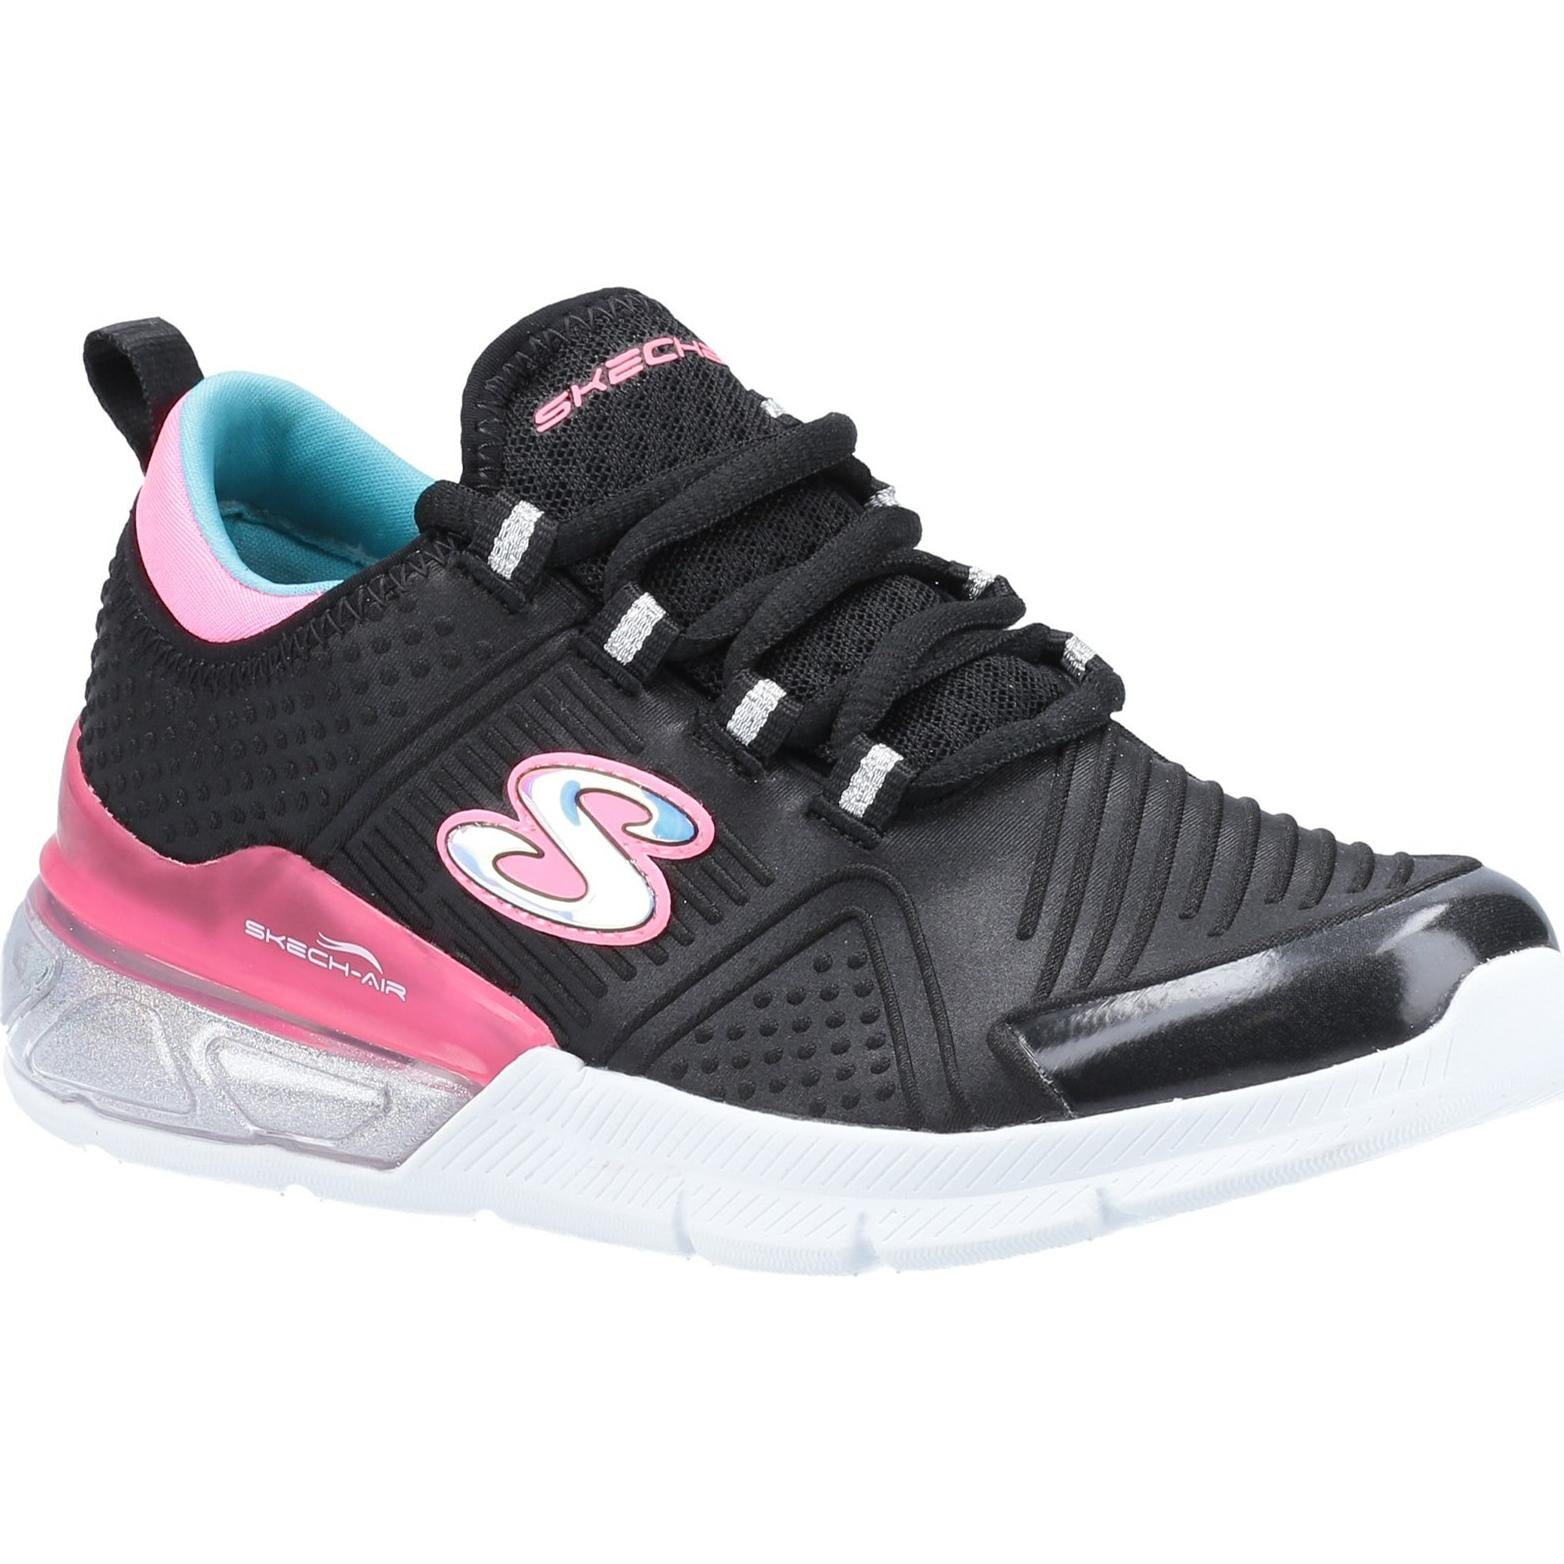 Skechers Skech-Air Sparkle Optical Shine Sports Shoe